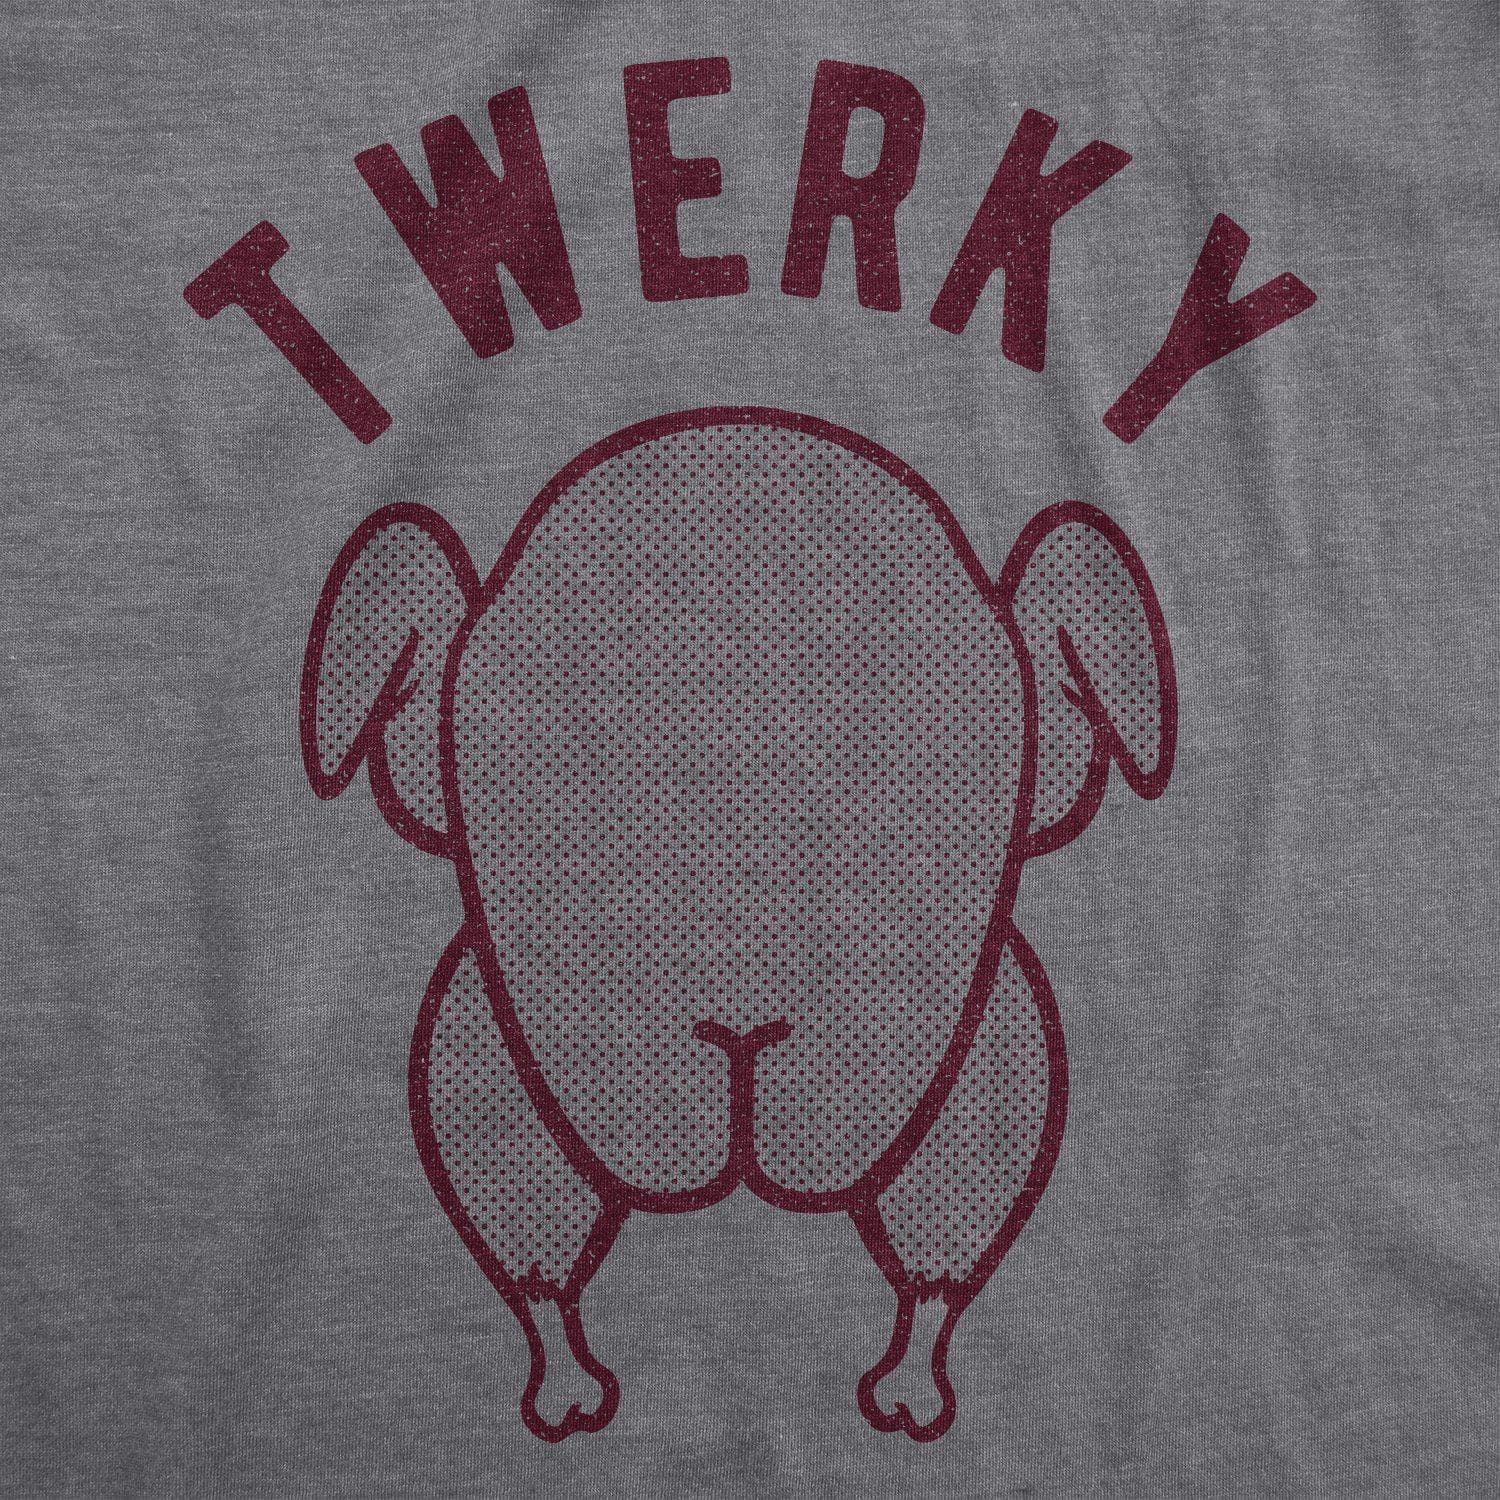 Twerky Men's Tshirt - Crazy Dog T-Shirts